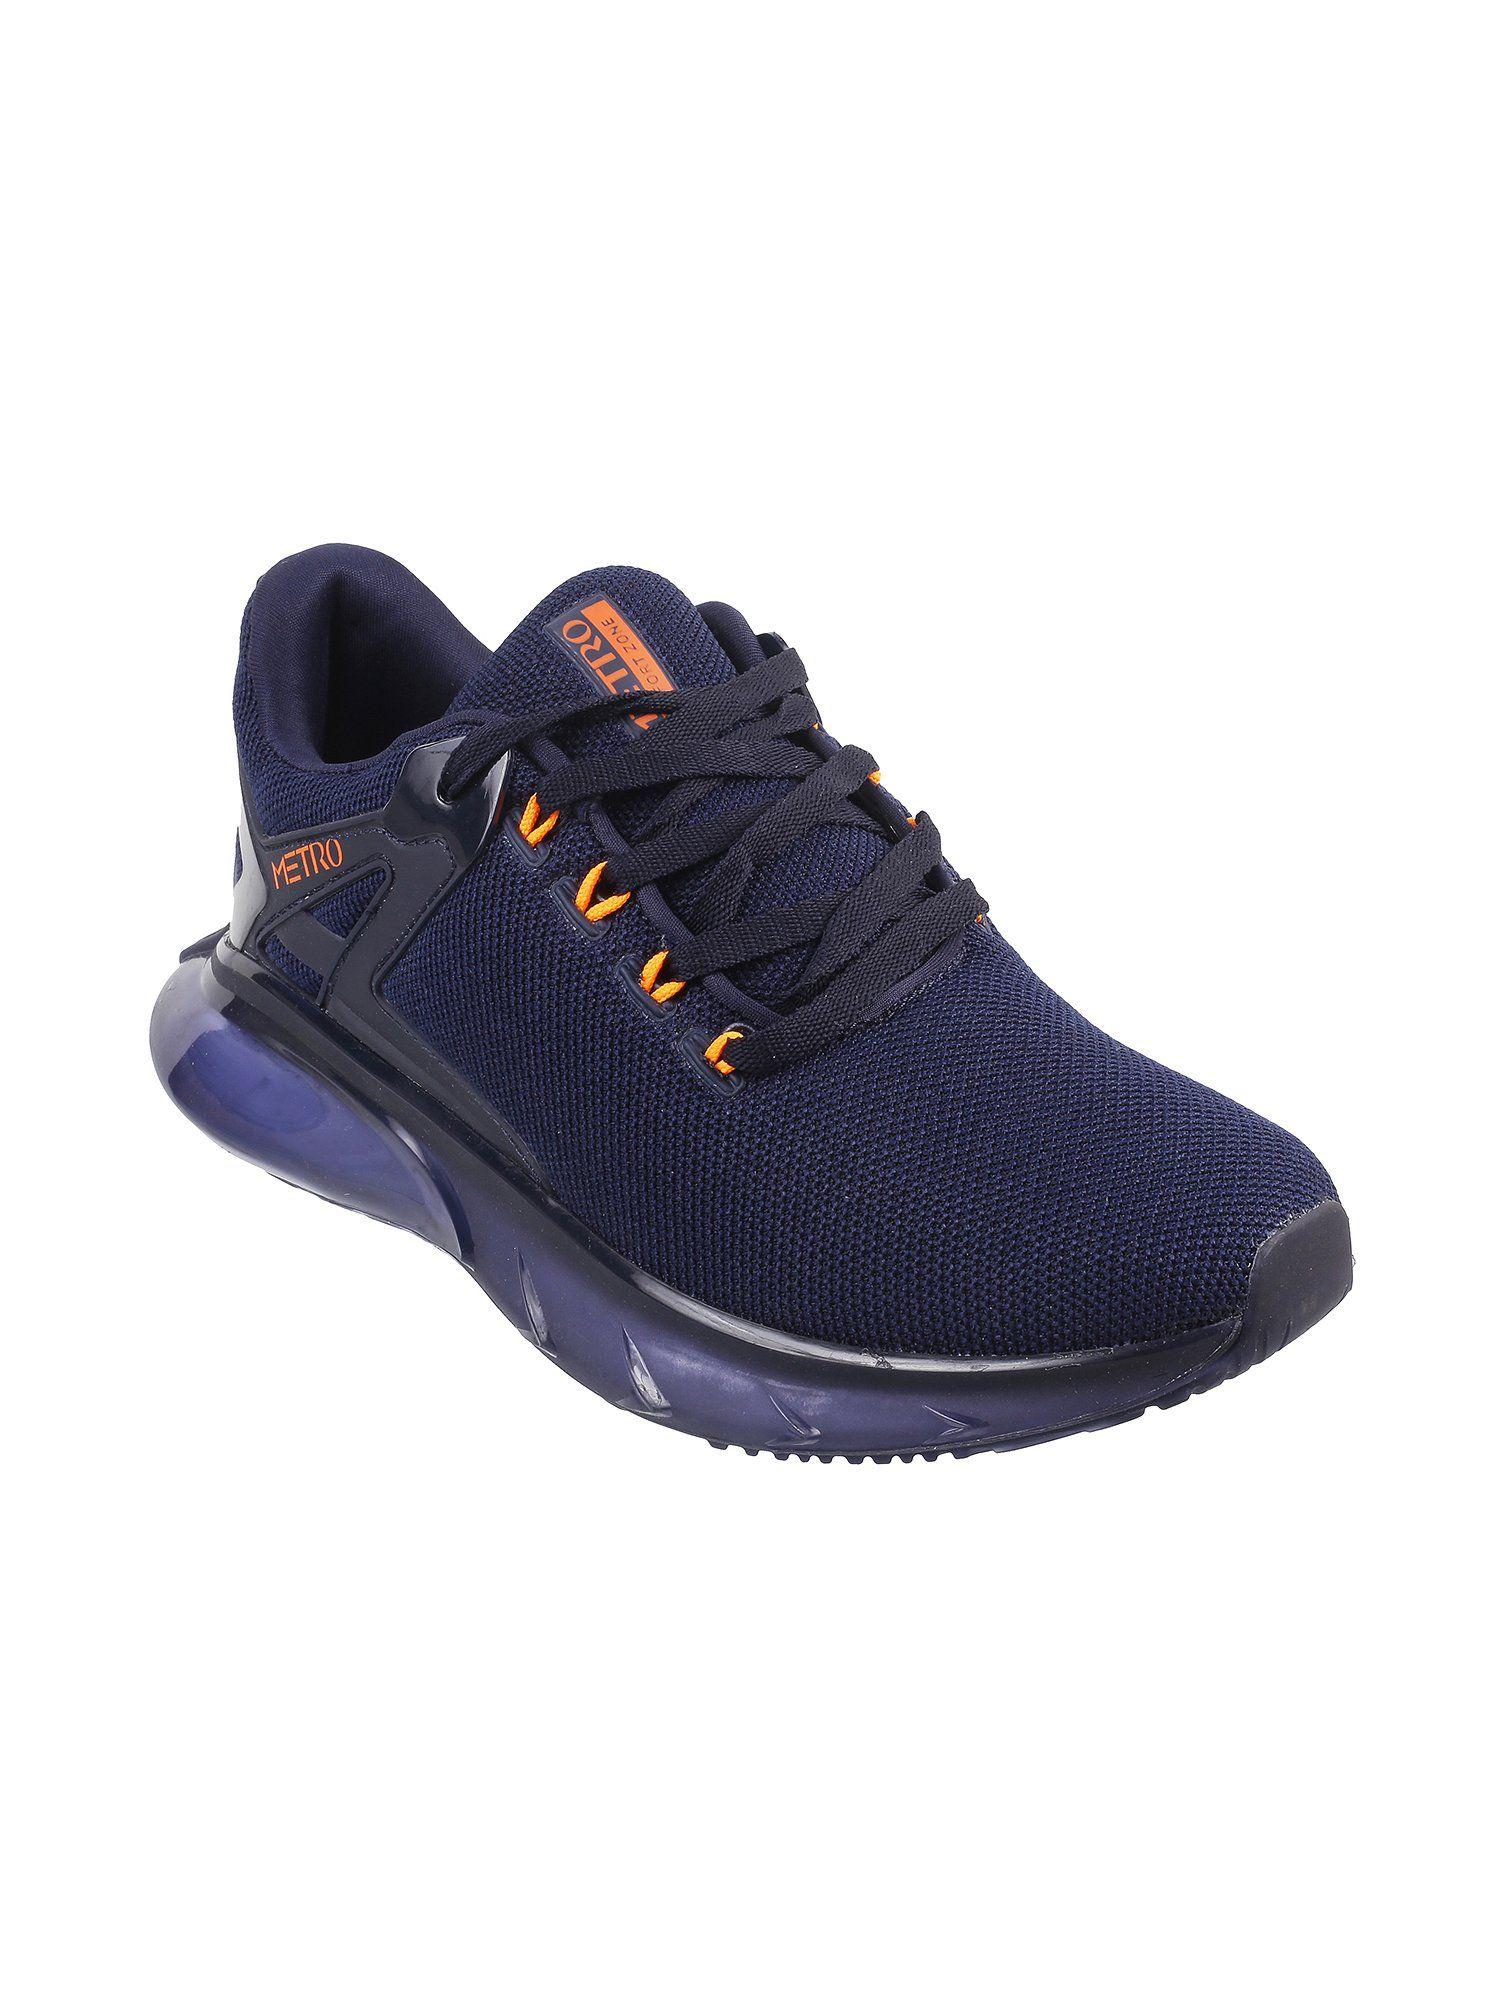 mens-blue-sports-lace-ups-shoesmetro-plain-blue-walking-shoes